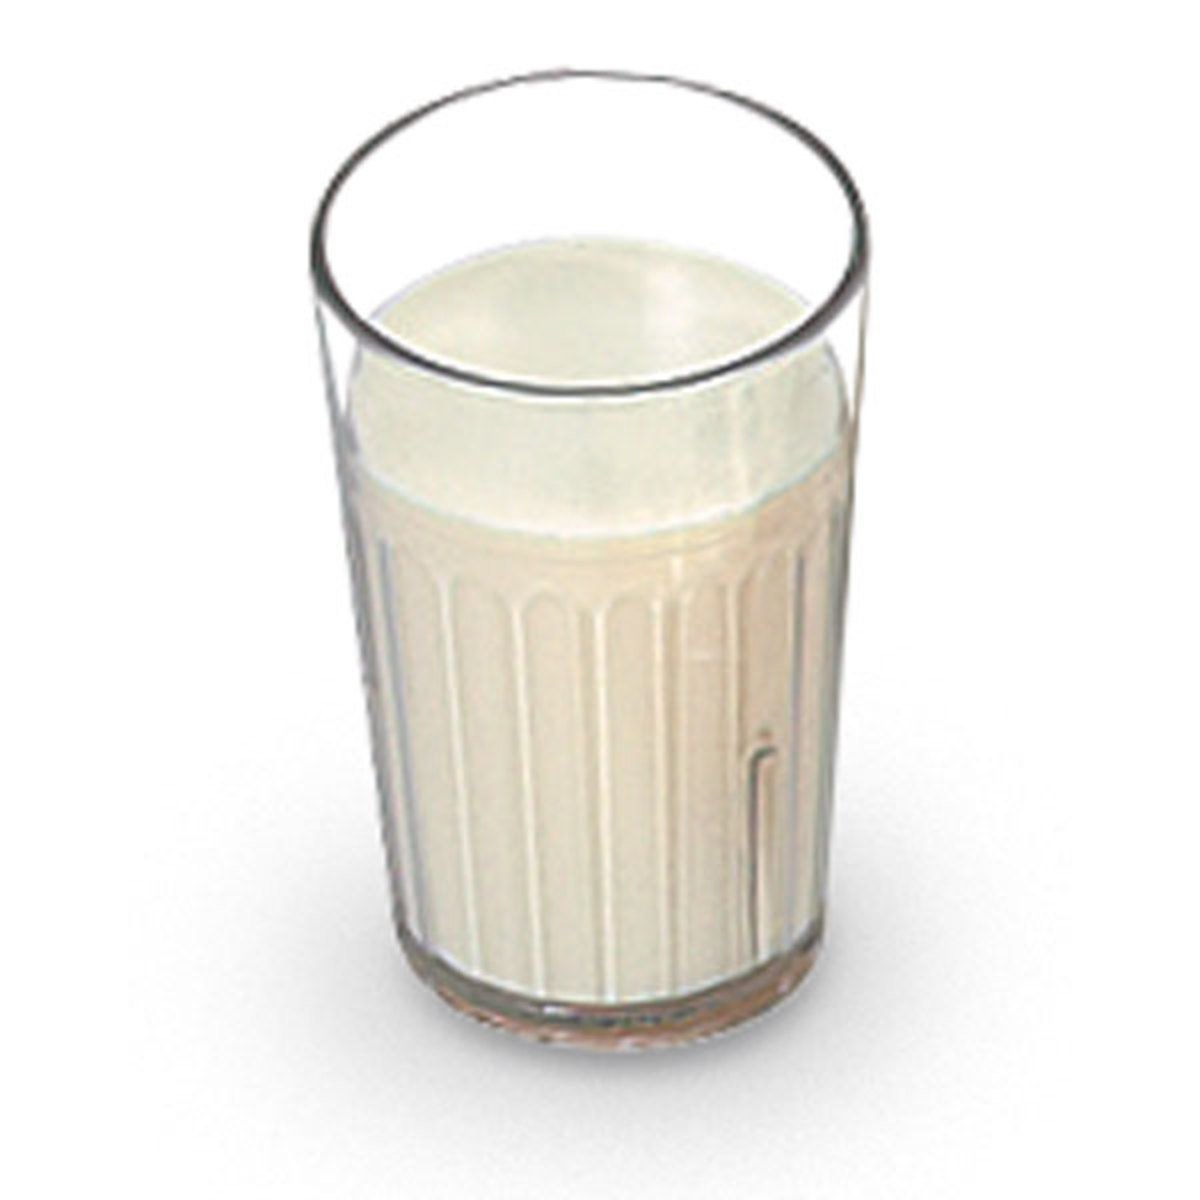 Nasco Milk Food Replica - Chocolate - 8 fl. oz.